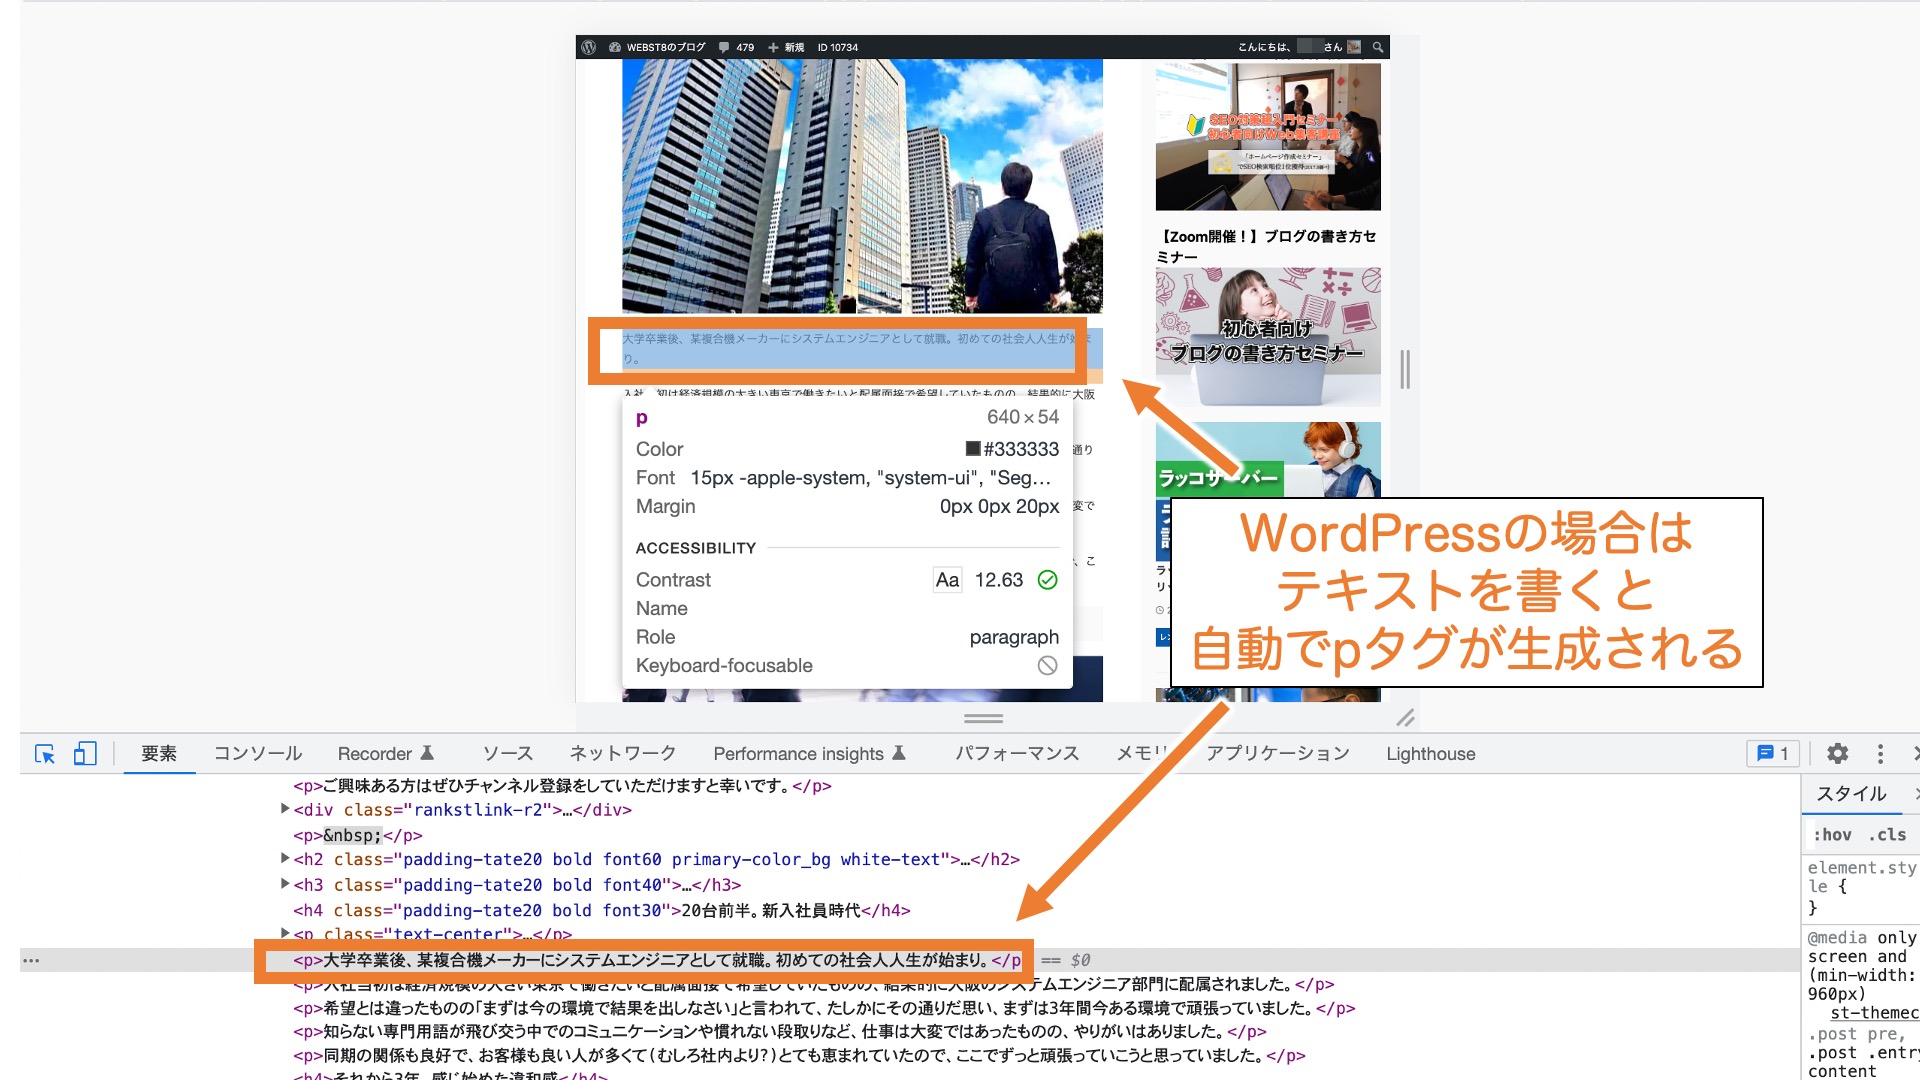 WordPressの場合は、テキストを書くと自動でpタグが生成される